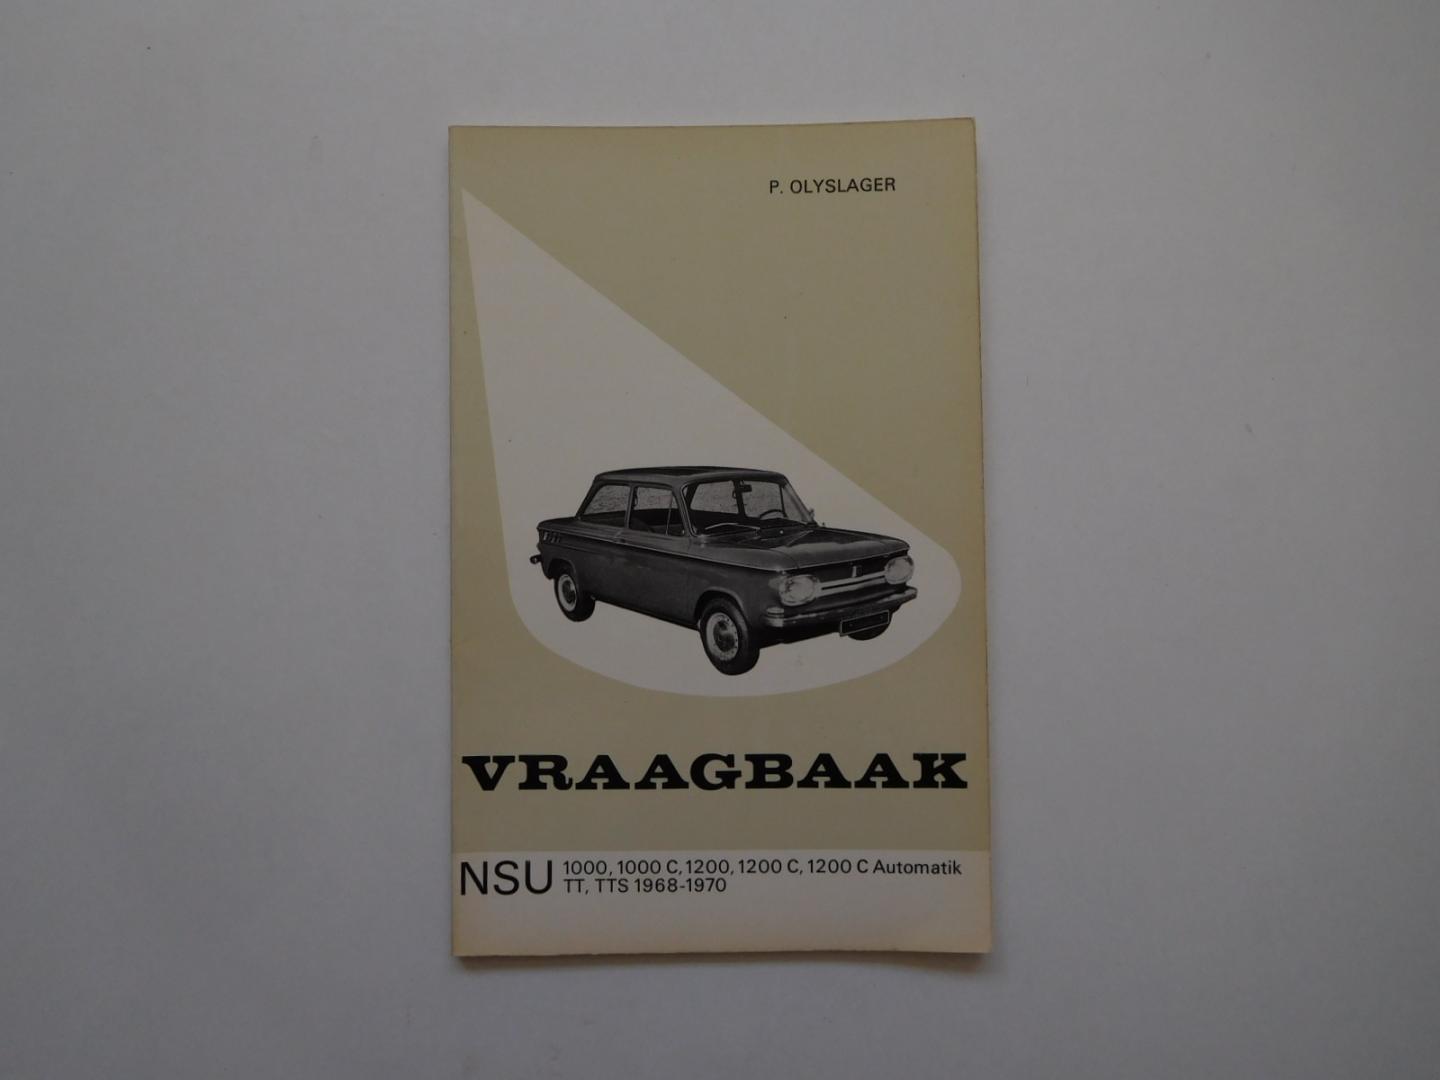 Olyslager, P. - VRaagbaak NSU 1000,1000C,1200,1200C,1200C Automatik TT, TTS 1968-1970